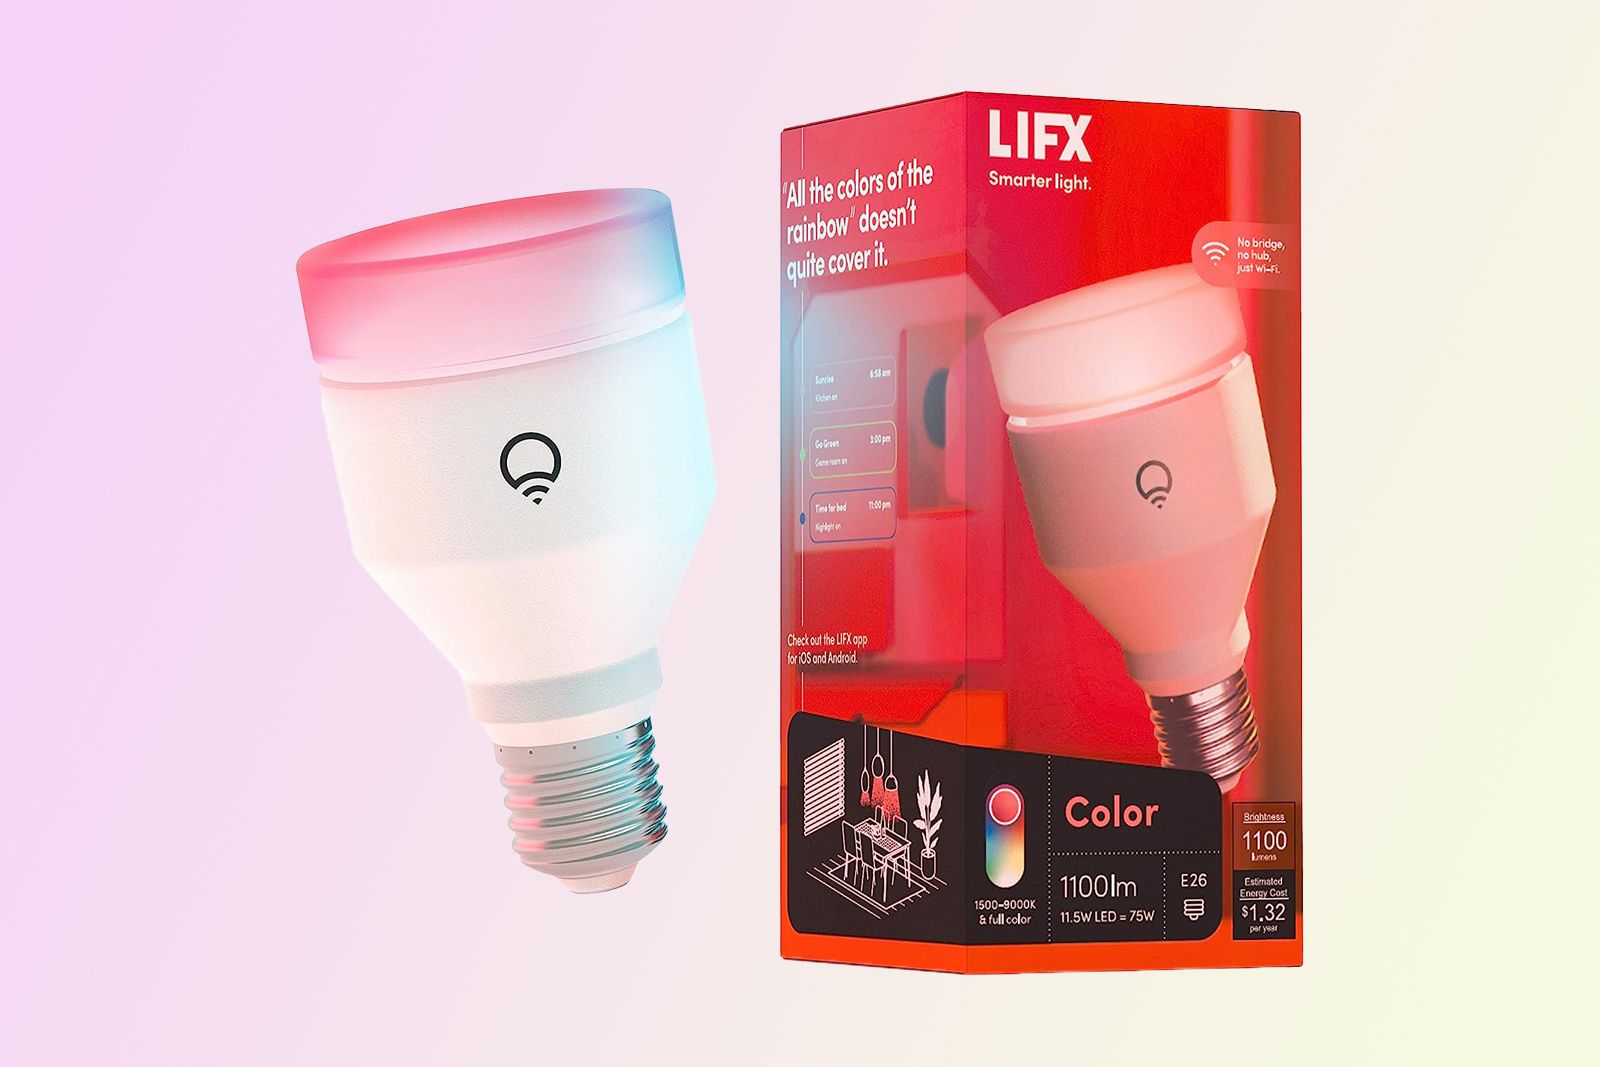 lifx color smart bulb 1100 lumens